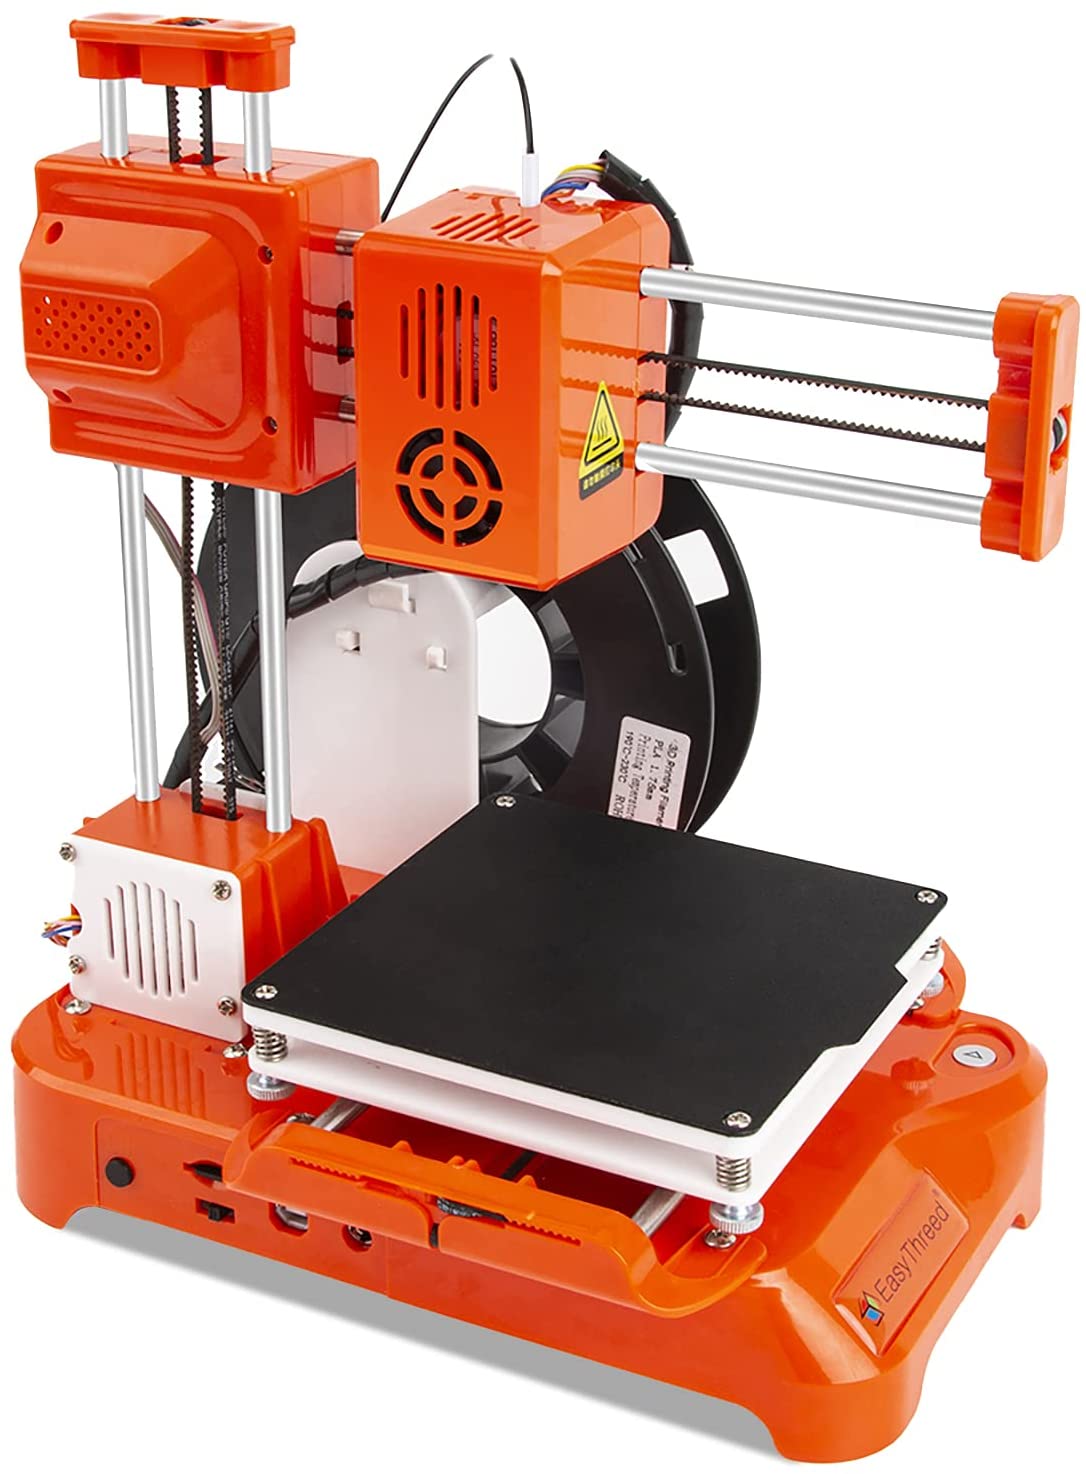 Mini 3D Printer for Kids by Tecqeq Store